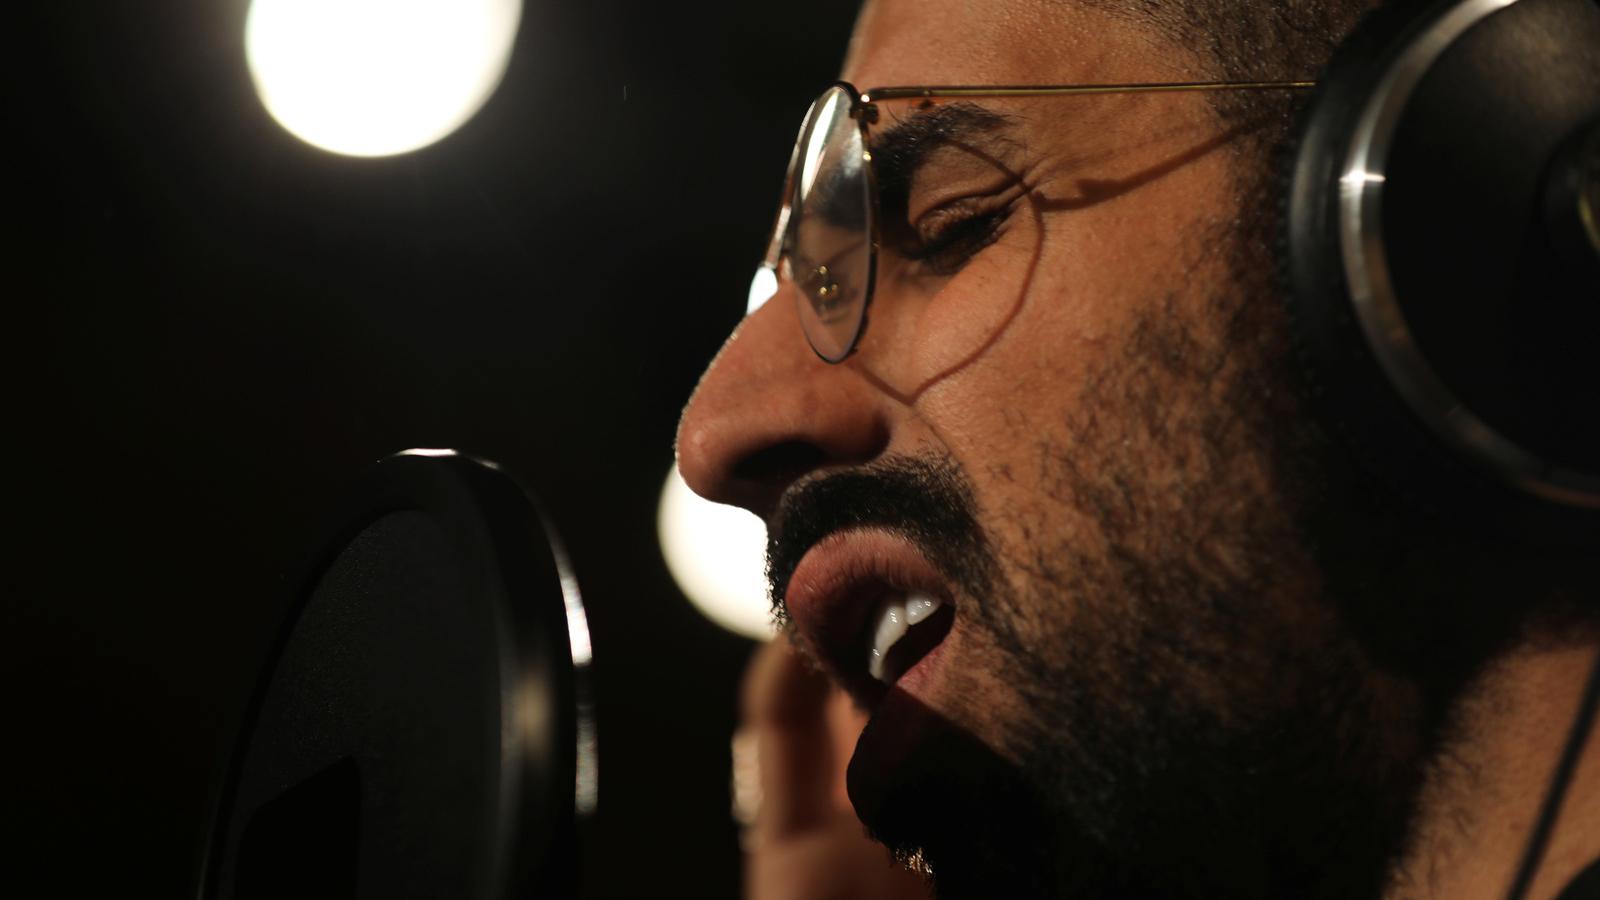 Palestinian musician Bashar Murad works at a recording studio in Sheikh Jarrah, East Jerusalem, Nov. 19, 2018. 